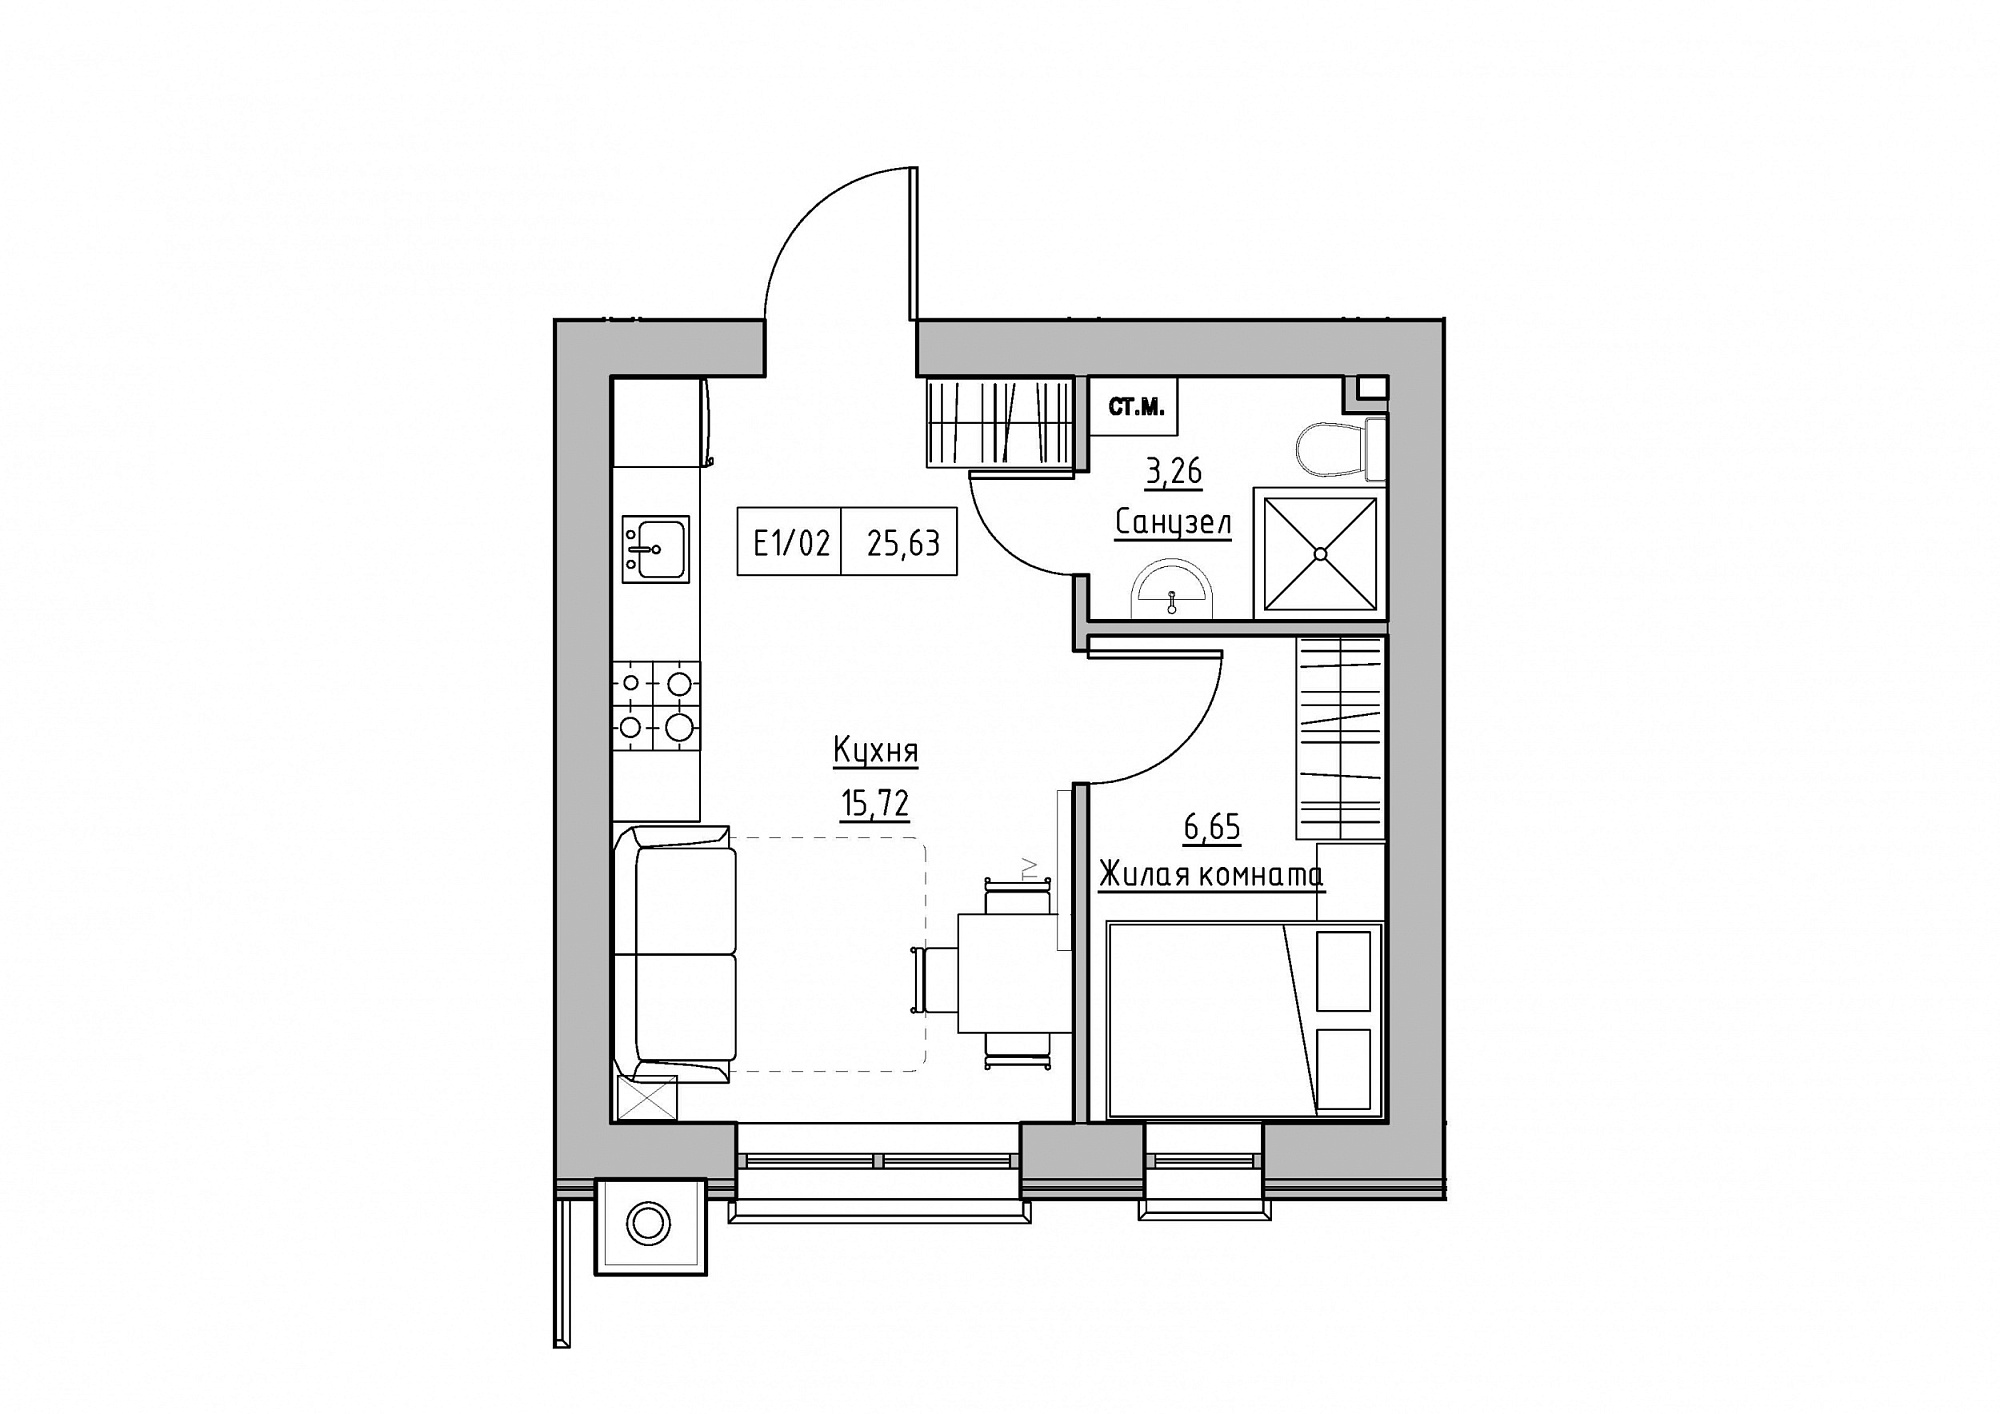 Planning 1-rm flats area 25.63m2, KS-012-04/0004.